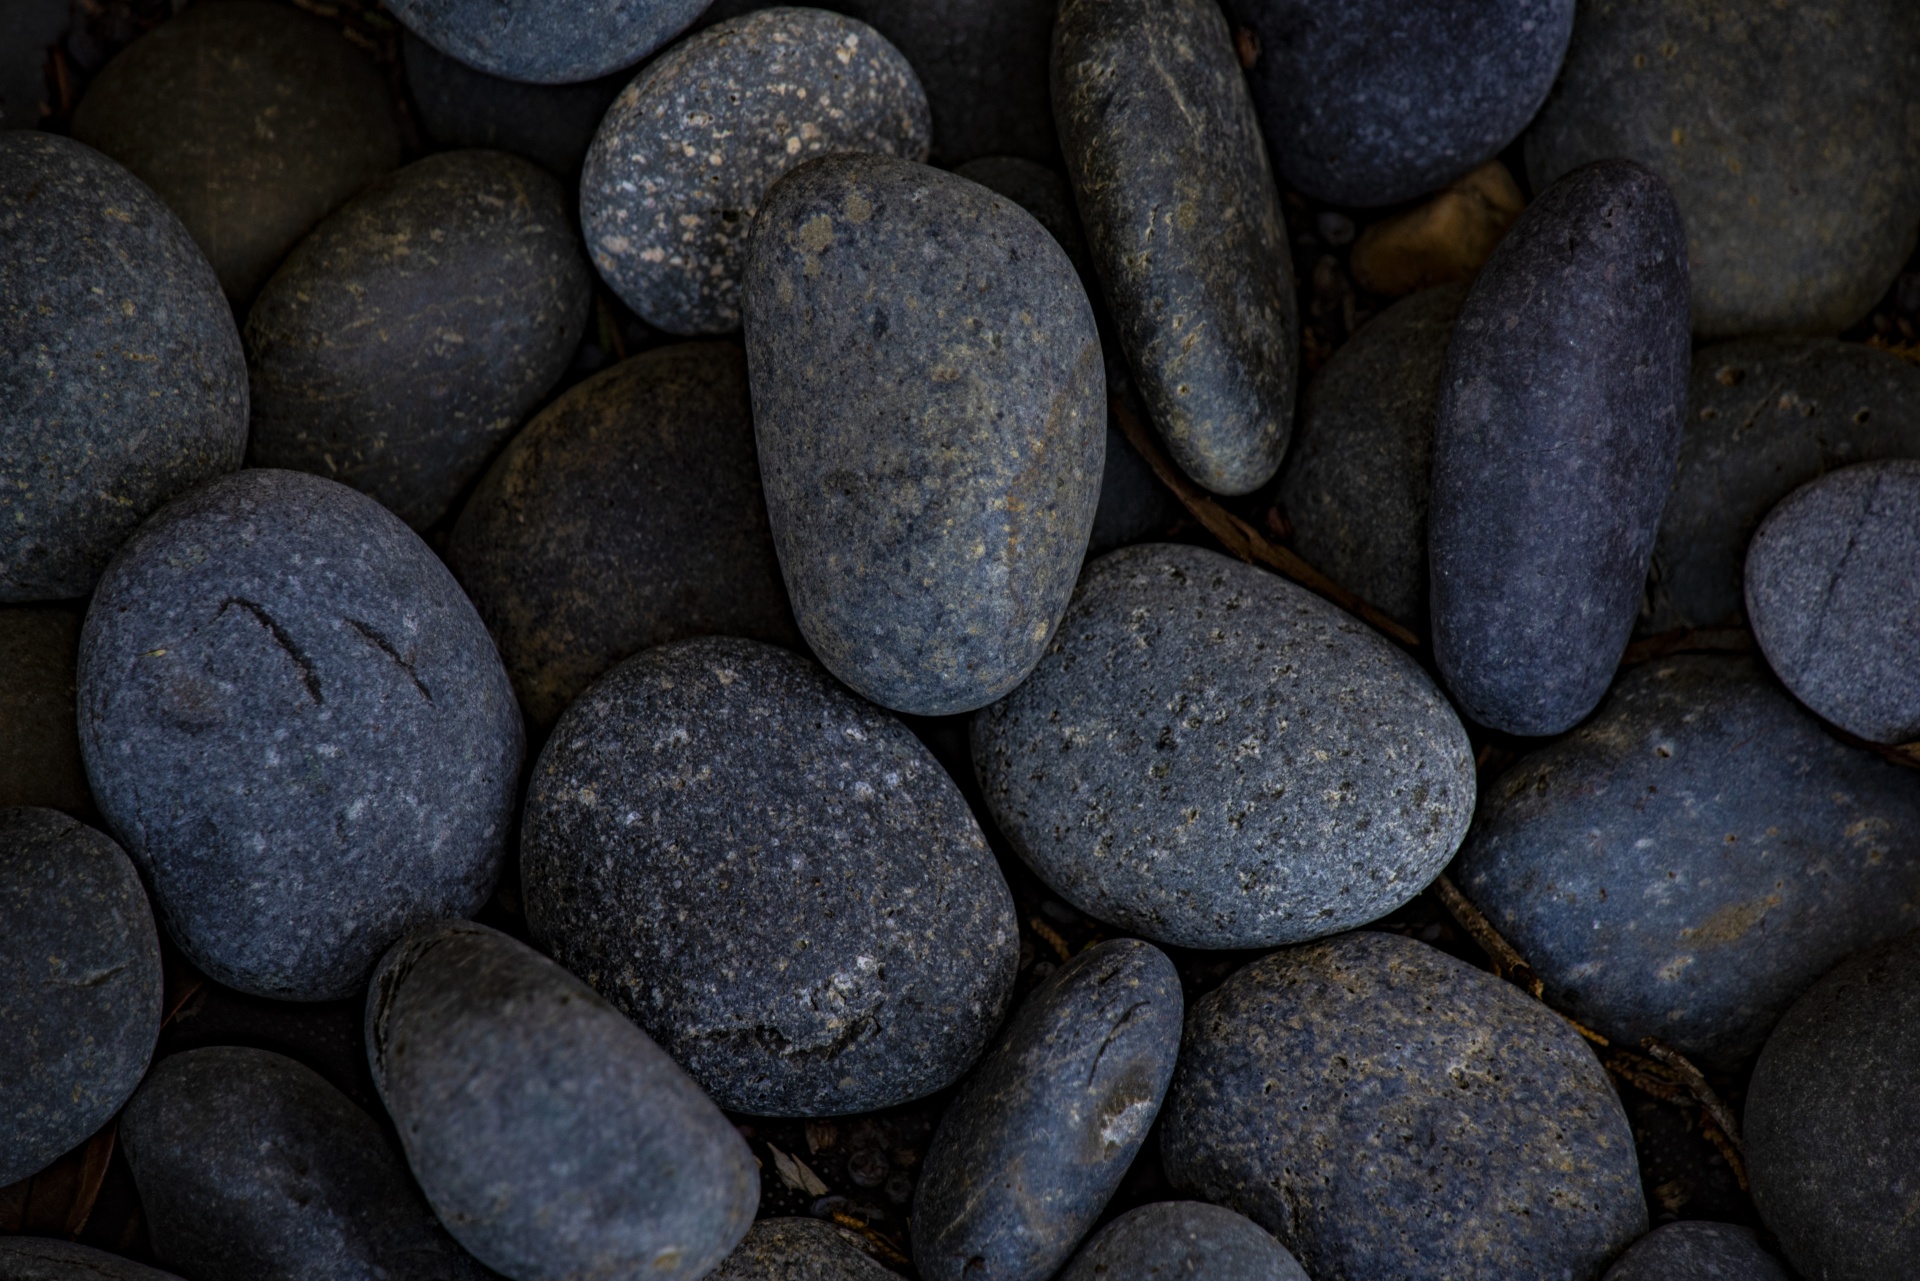 River rocks in blue tones